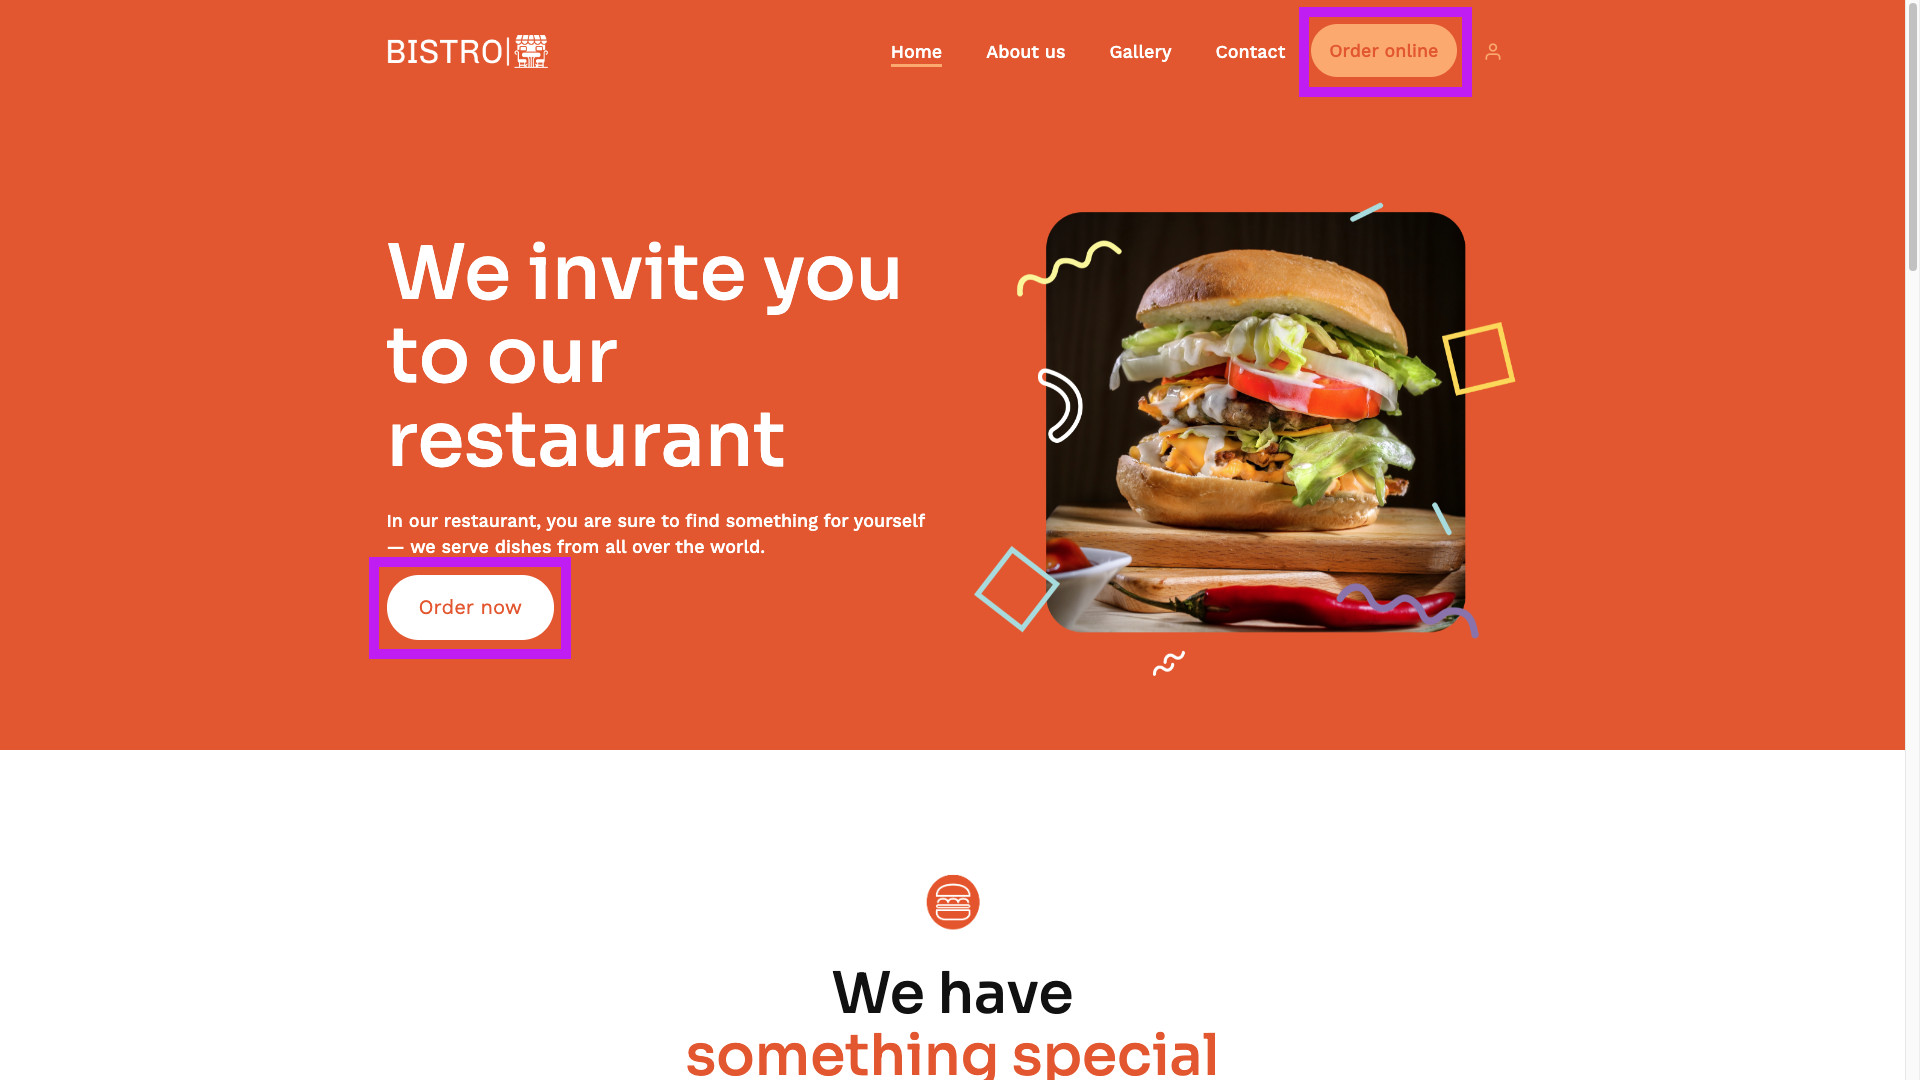 A simple restaurant website for bistros and fast food restaurants